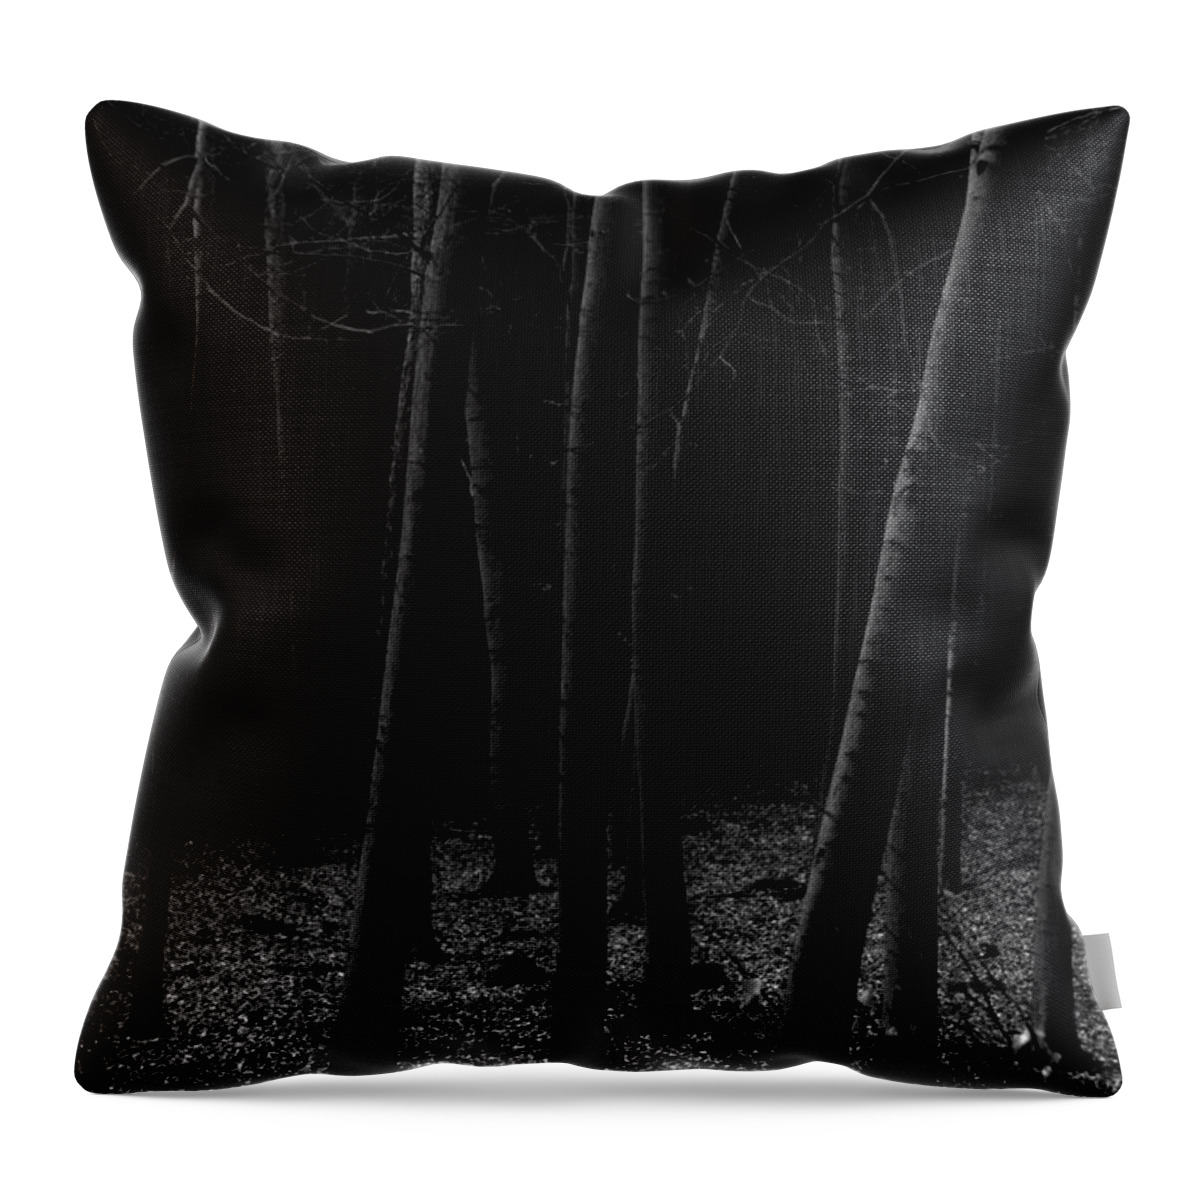 Fine Art Throw Pillow featuring the photograph Silent Woods by Dorit Fuhg